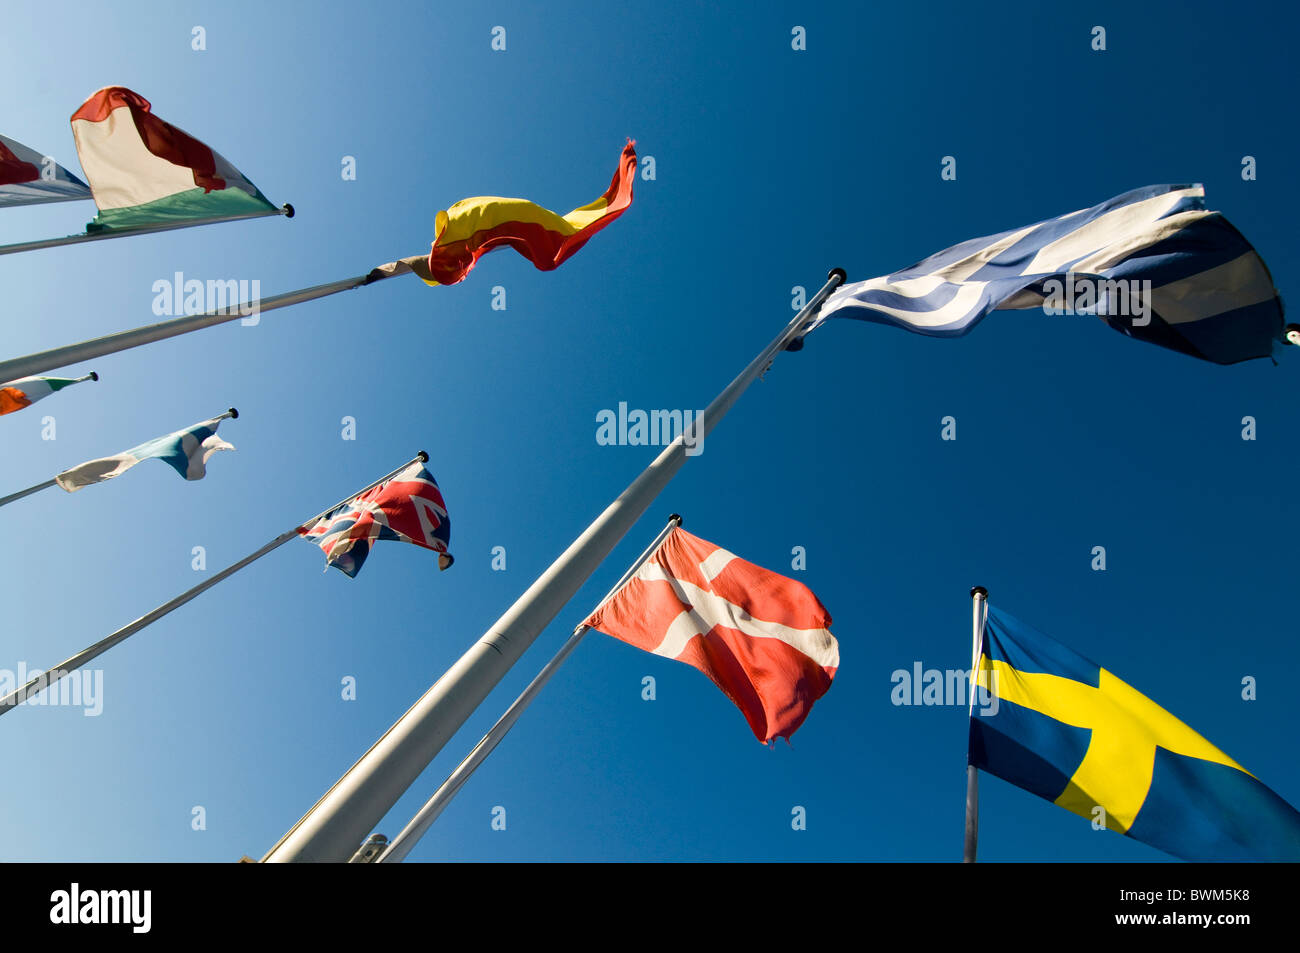 European flags flying against a deep blue sky Stock Photo